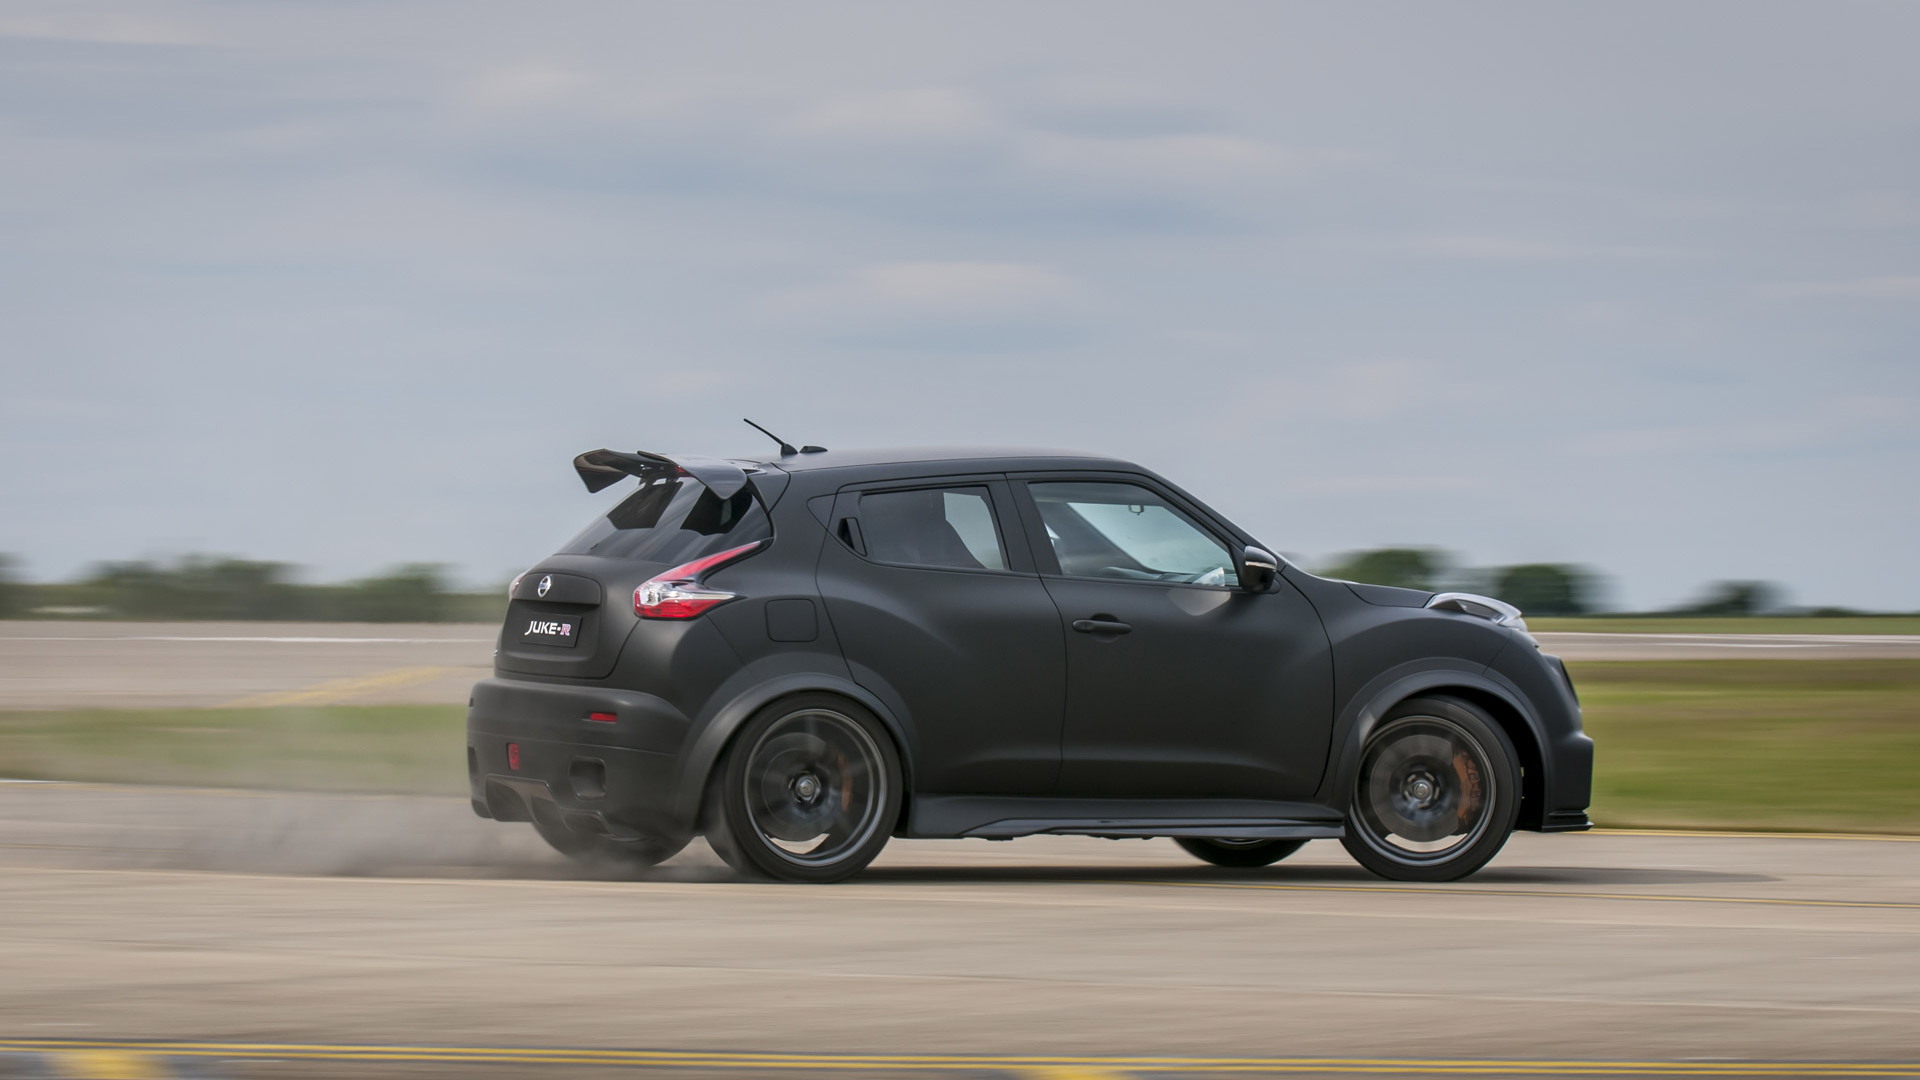 Nissan Juke-R 2.0 concept, 2015 Goodwood Festival of Speed